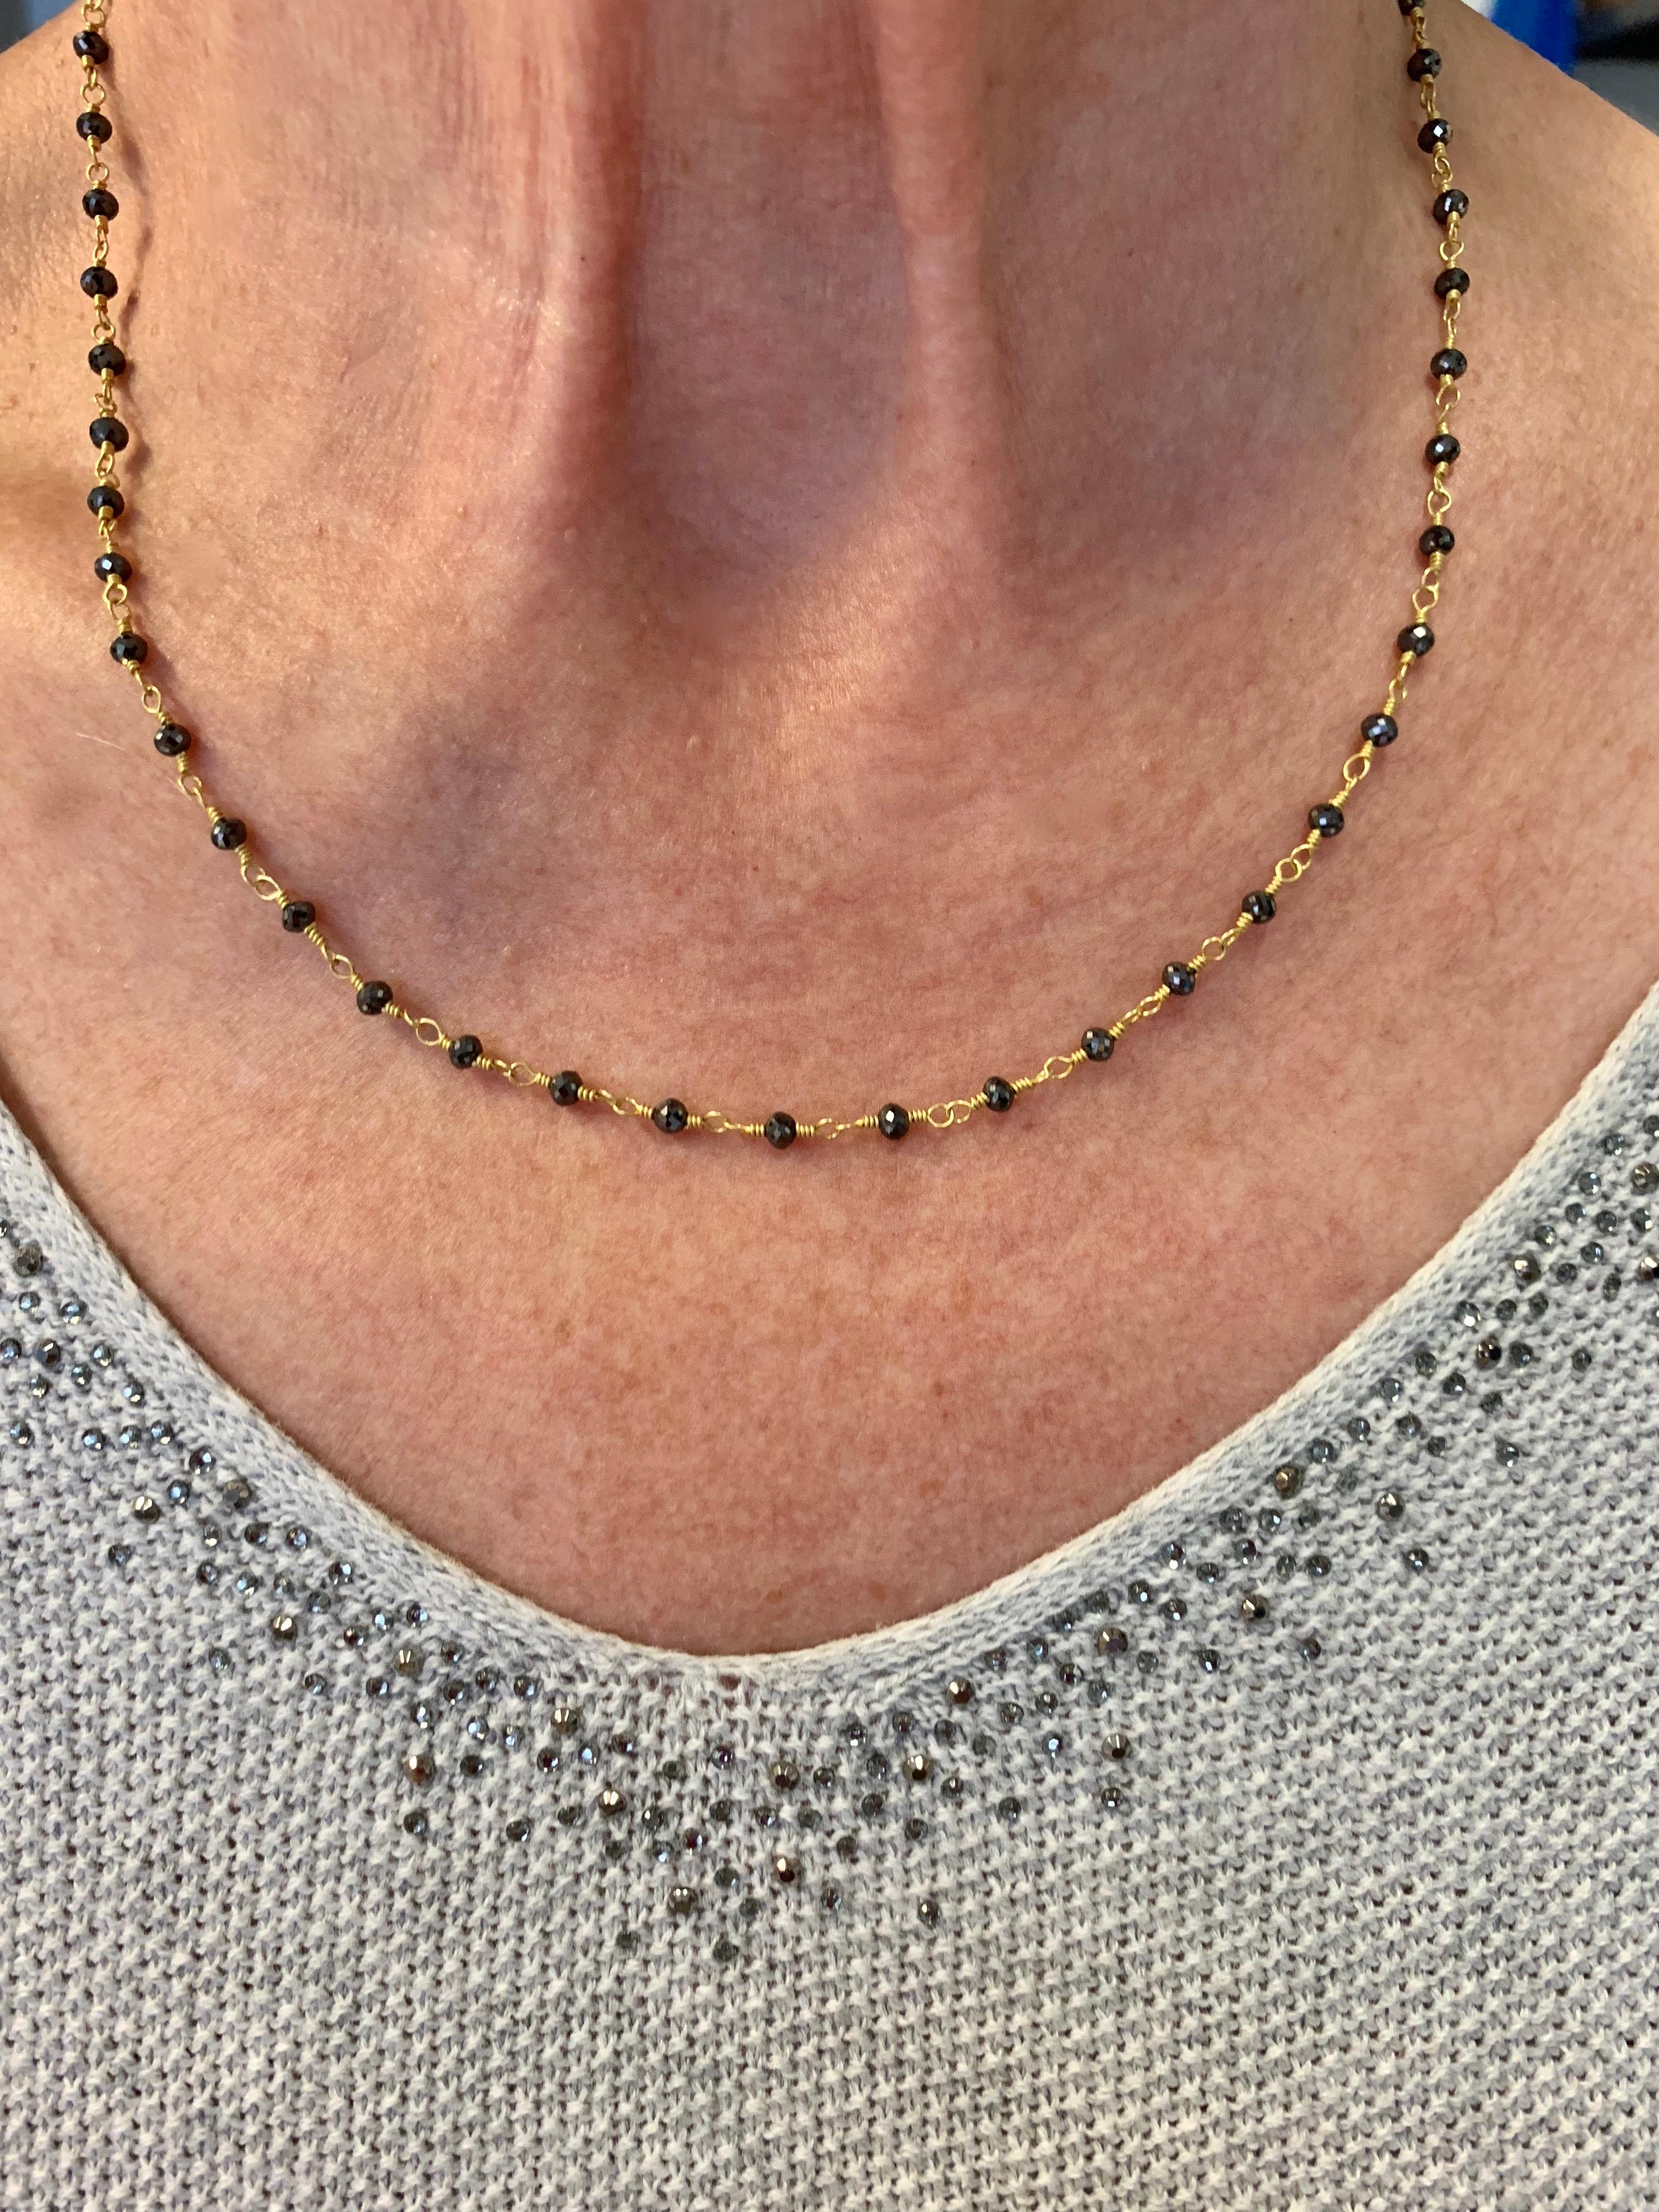 Round Cut Black Diamond Beads in yellow gold 20 Karat gold Necklace